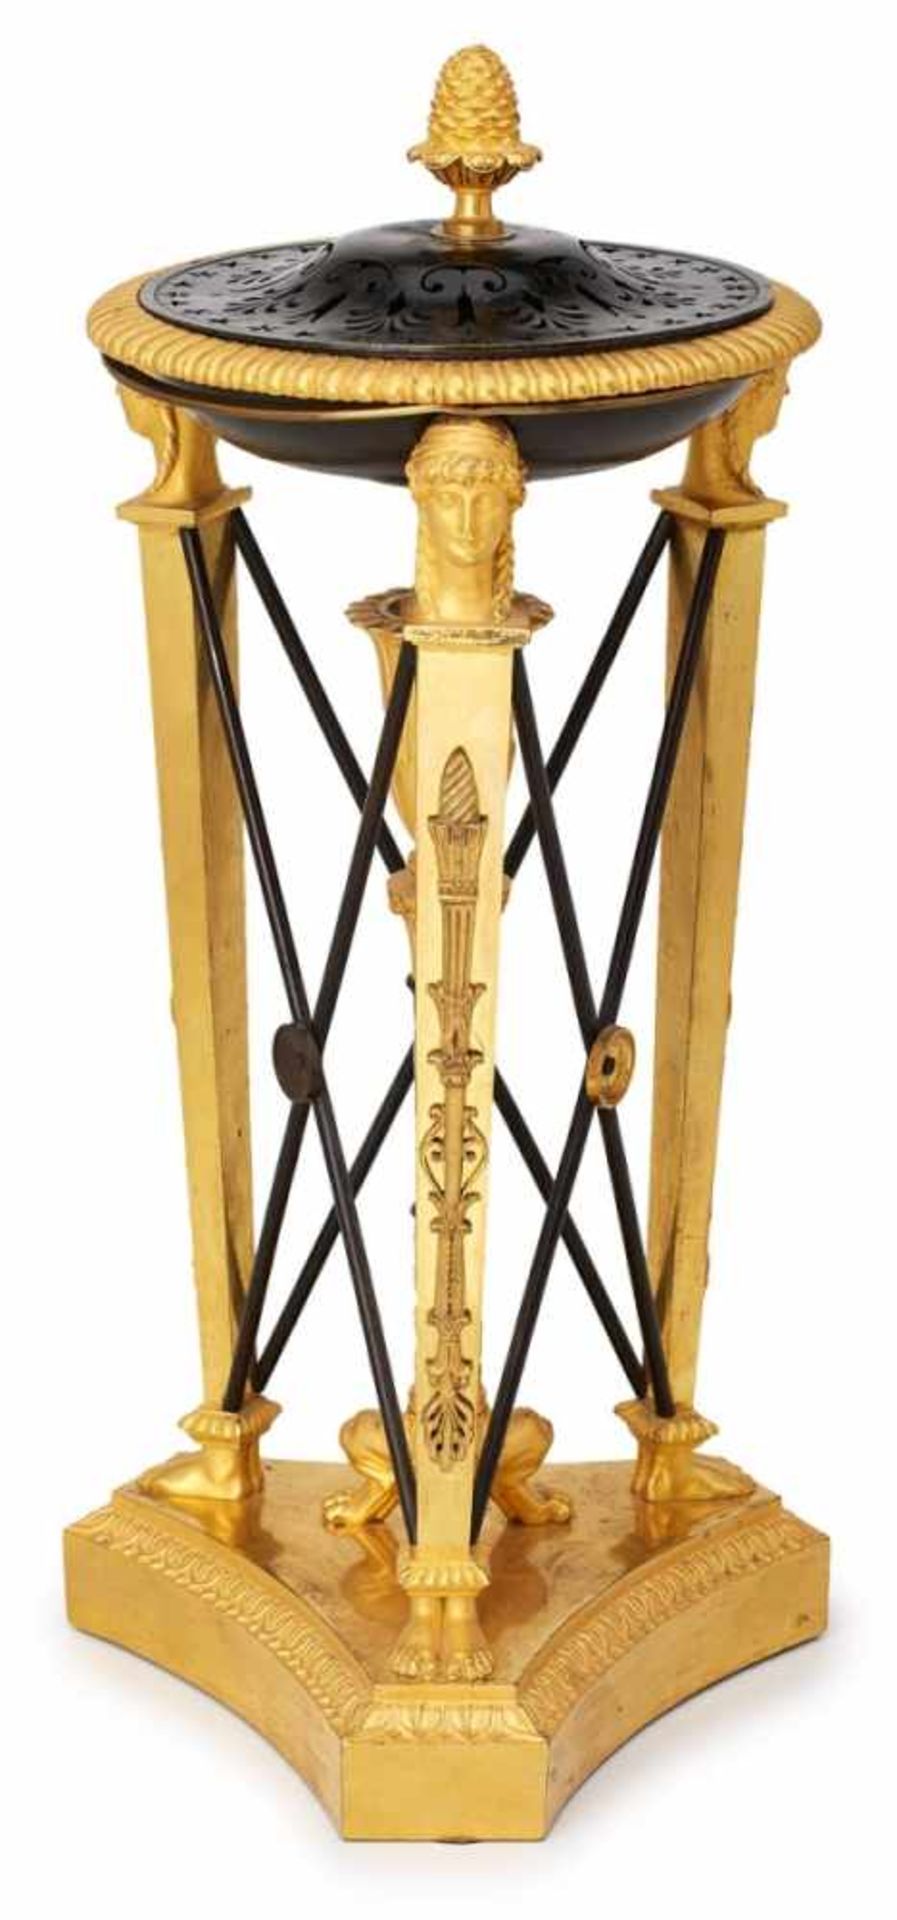 Brûle Parfum-Tafelaufsatz, Empire,Paris um 1800. Bronze, feuervergoldet u. partiell patiniert.